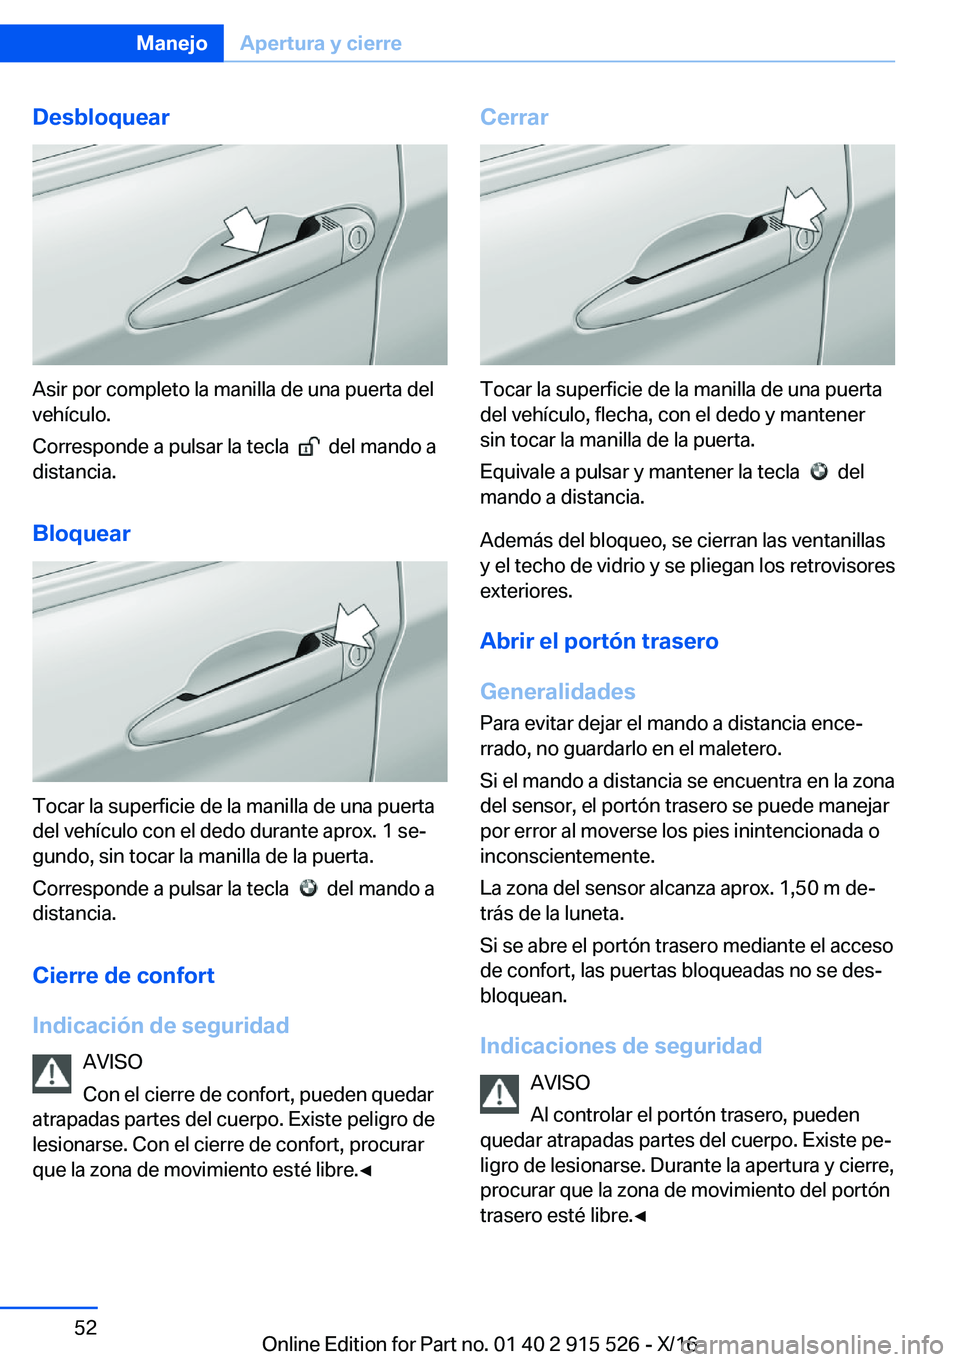 BMW X5 2017  Manuales de Empleo (in Spanish) �D�e�s�b�l�o�q�u�e�a�r
�A�s�i�r� �p�o�r� �c�o�m�p�l�e�t�o� �l�a� �m�a�n�i�l�l�a� �d�e� �u�n�a� �p�u�e�r�t�a� �d�e�l�v�e�h�í�c�u�l�o�.
�C�o�r�r�e�s�p�o�n�d�e� �a� �p�u�l�s�a�r� �l�a� �t�e�c�l�a� � 
� 